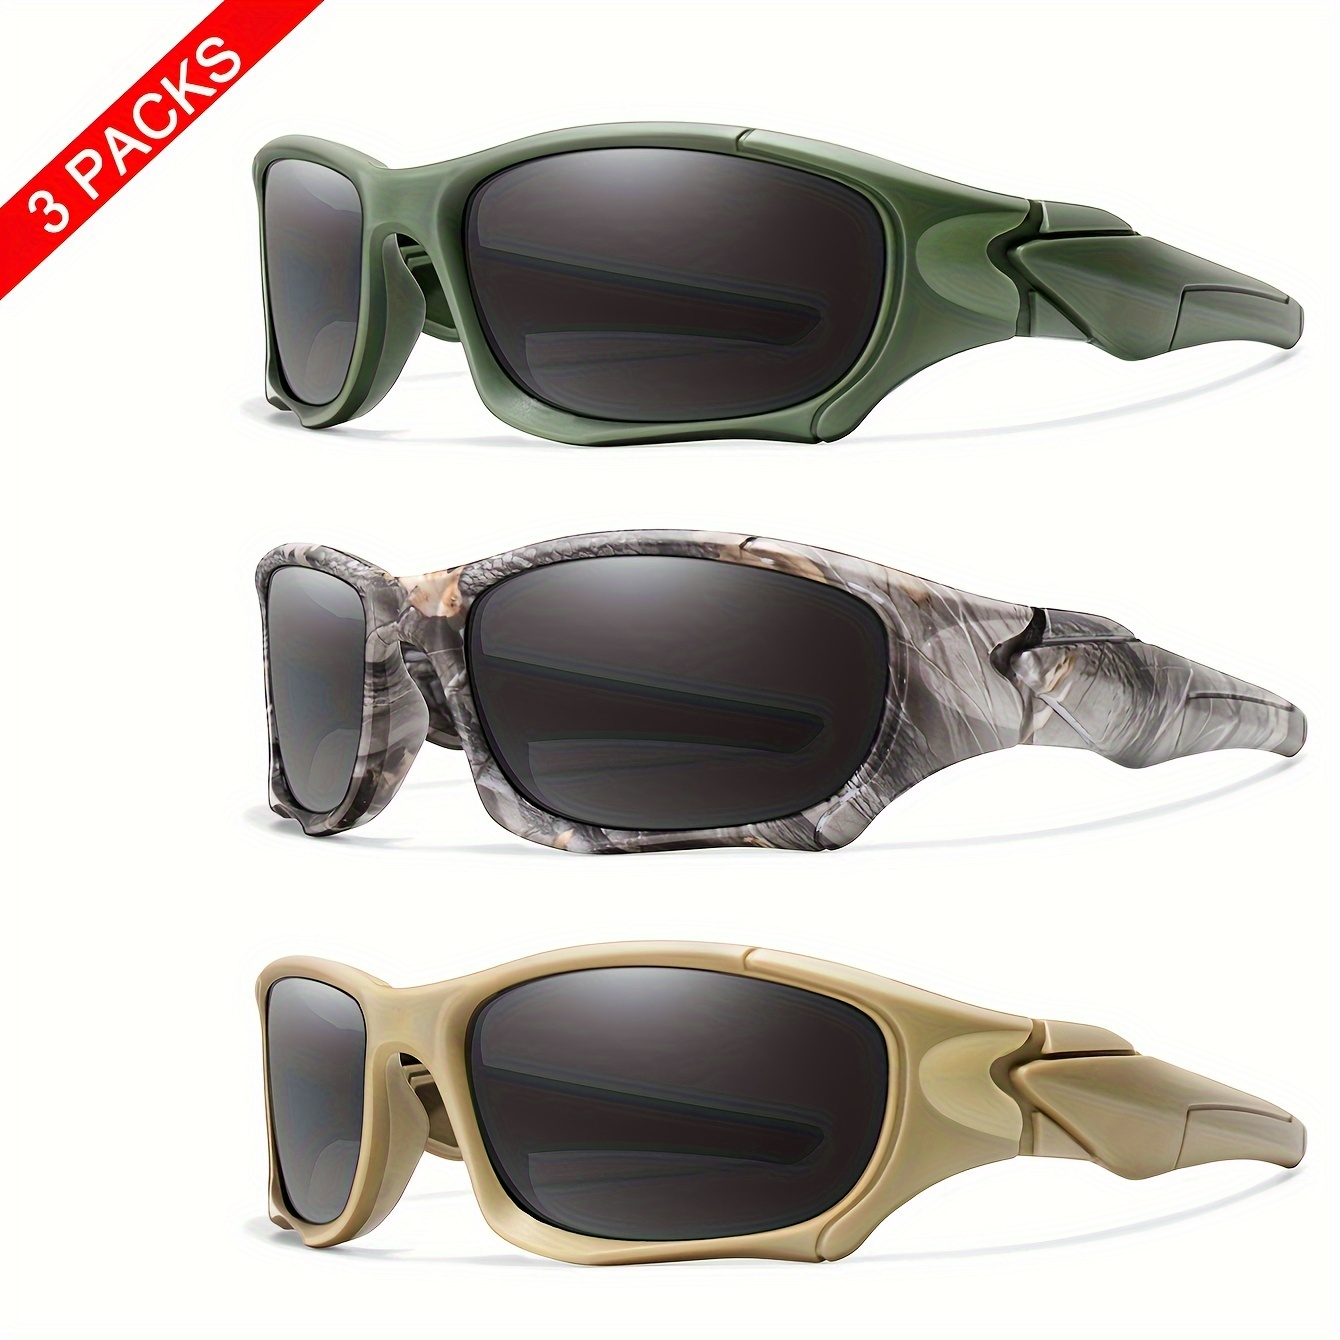 Tactical Sunglasses - Military Sunglasses